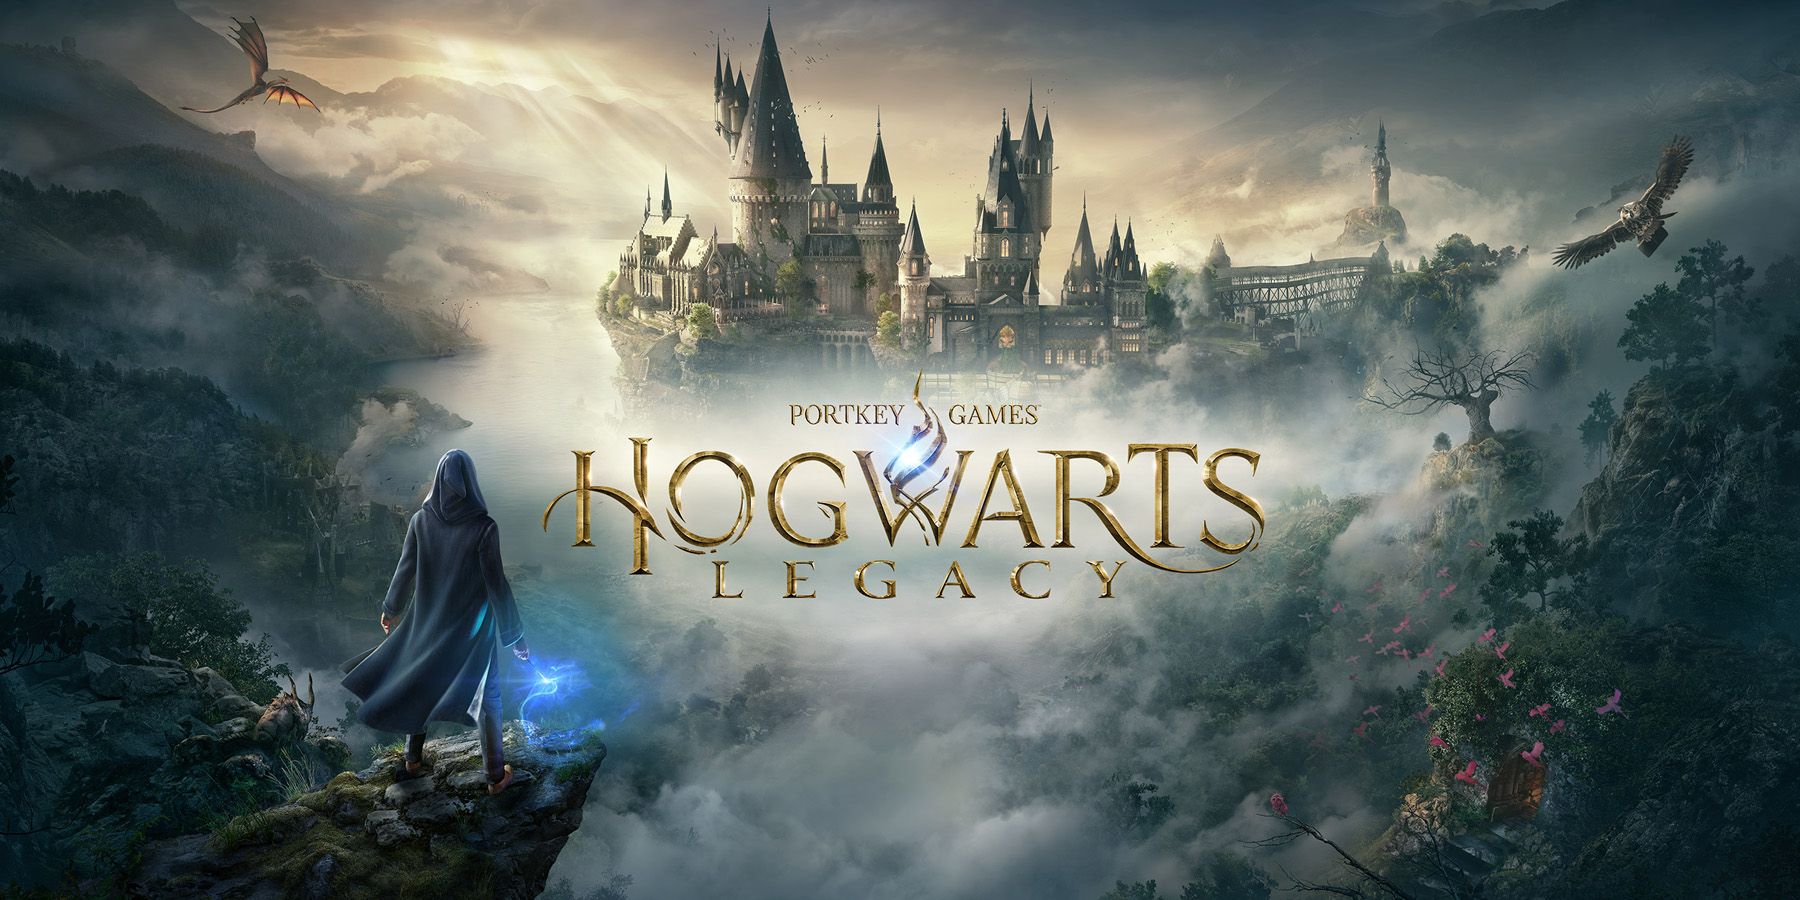 Hogwarts Legacy title